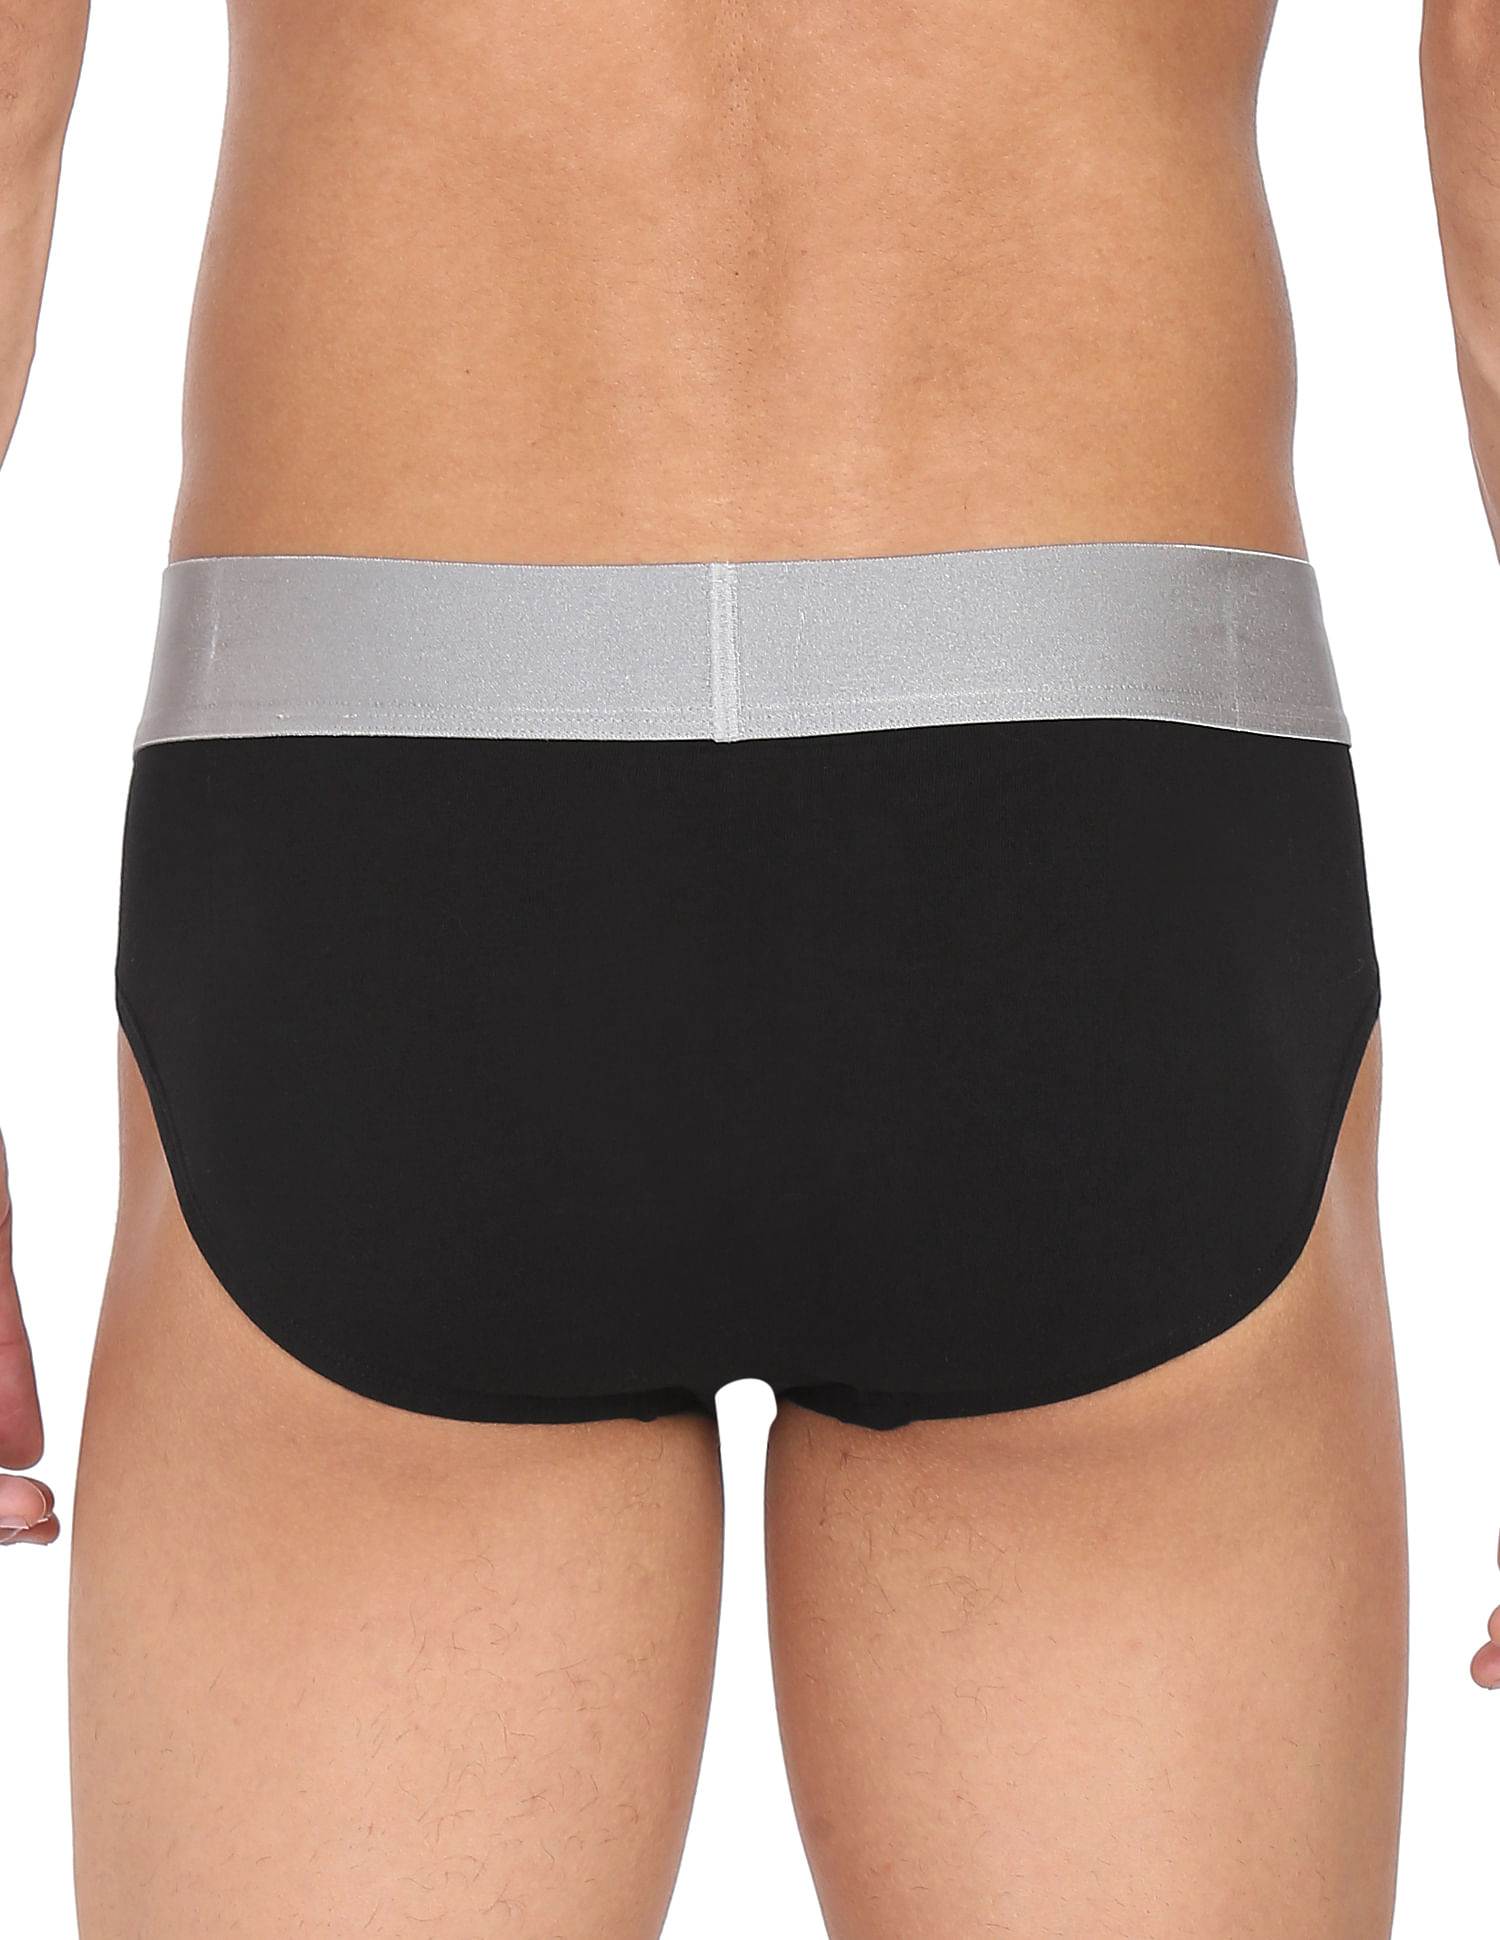 Buy Calvin Klein Underwear Men Assorted CK One Mid Rise Stretch Hipster  Briefs - Pack Of 2 - NNNOW.com